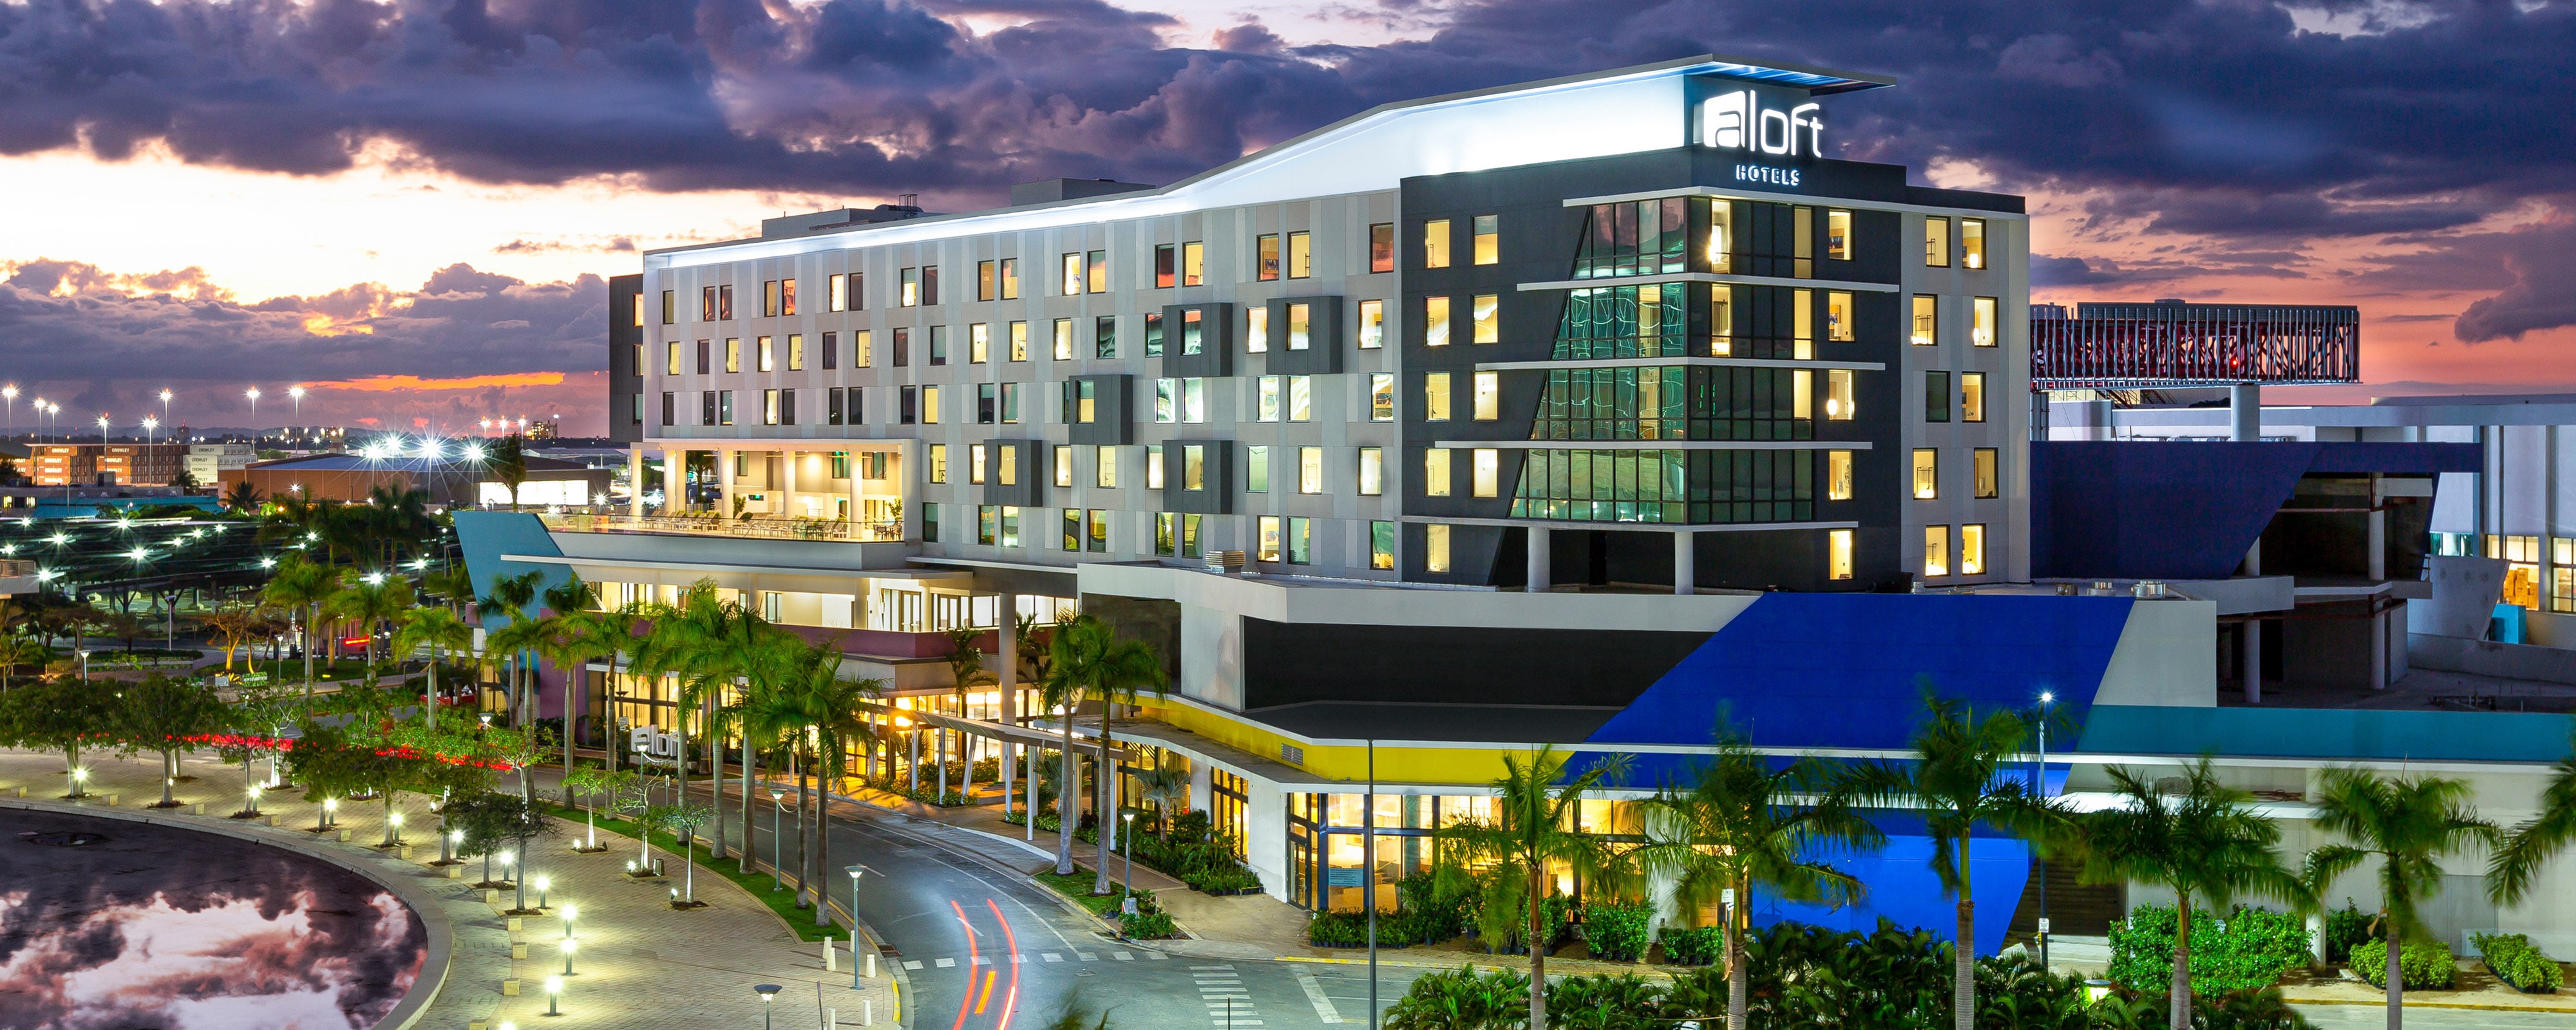 Image for Aloft San Juan, a Marriott hotel.